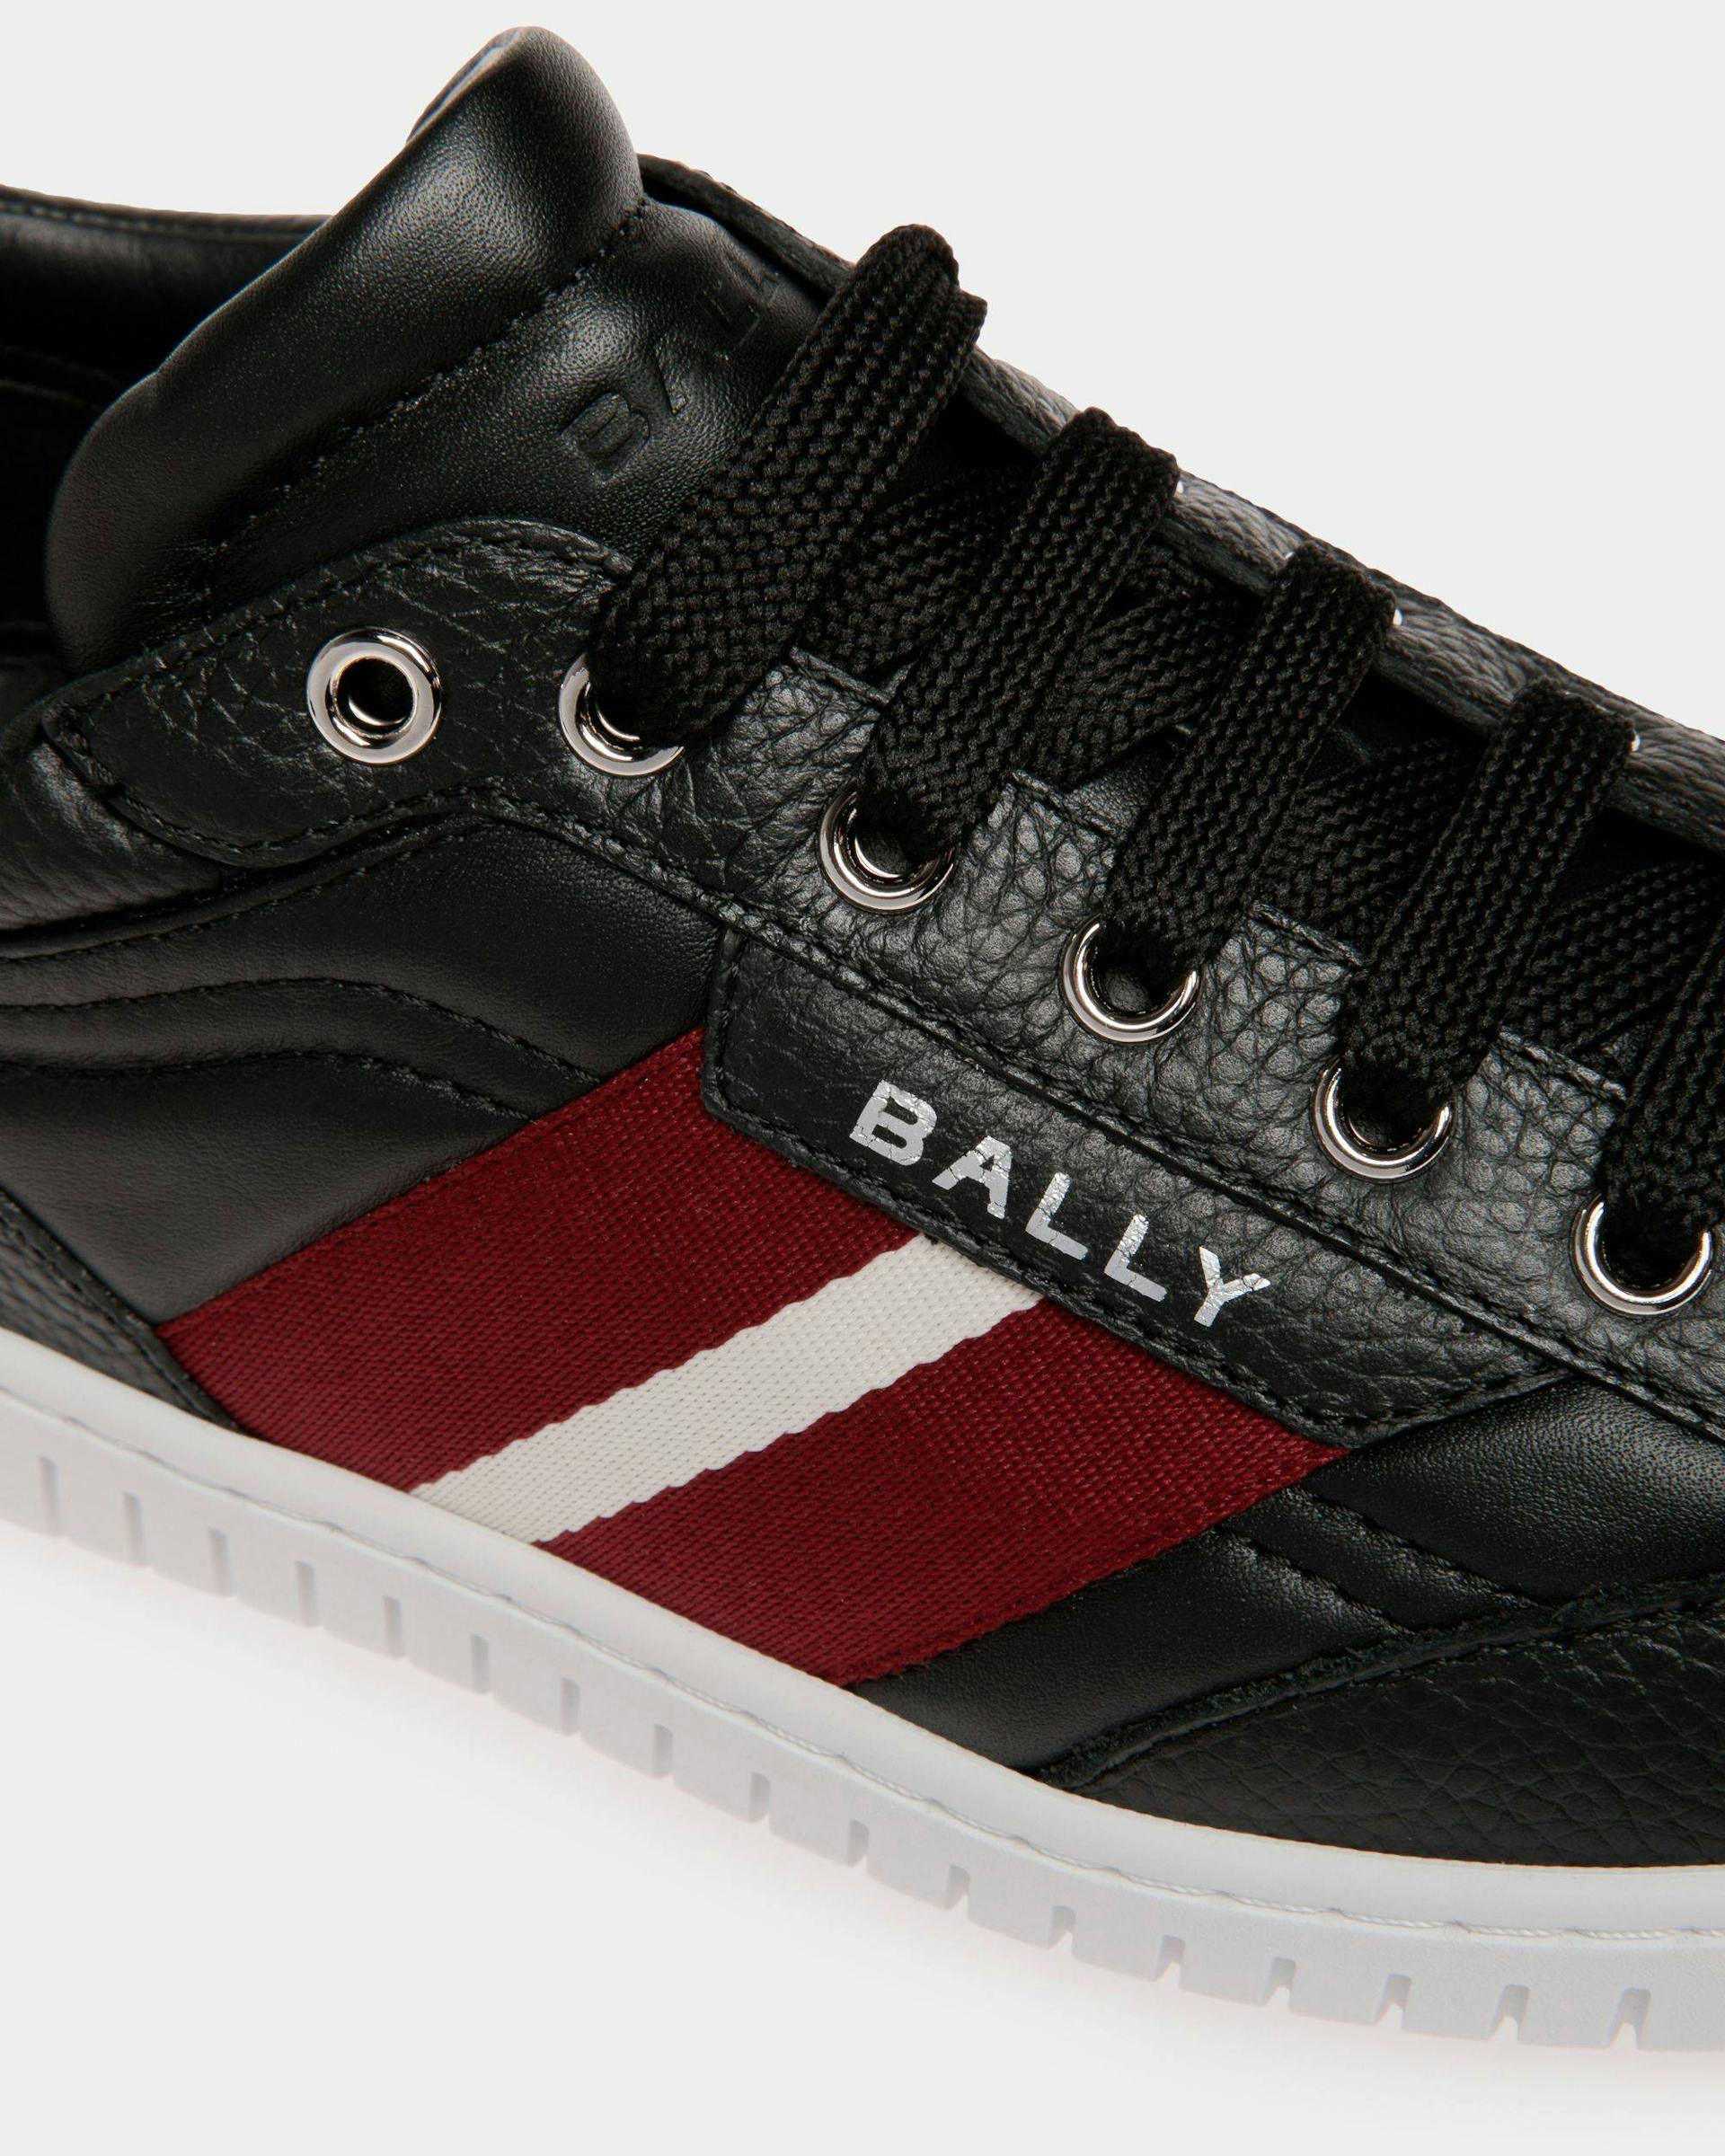 Women's Player Sneaker In Black Leather | Bally | Still Life Detail